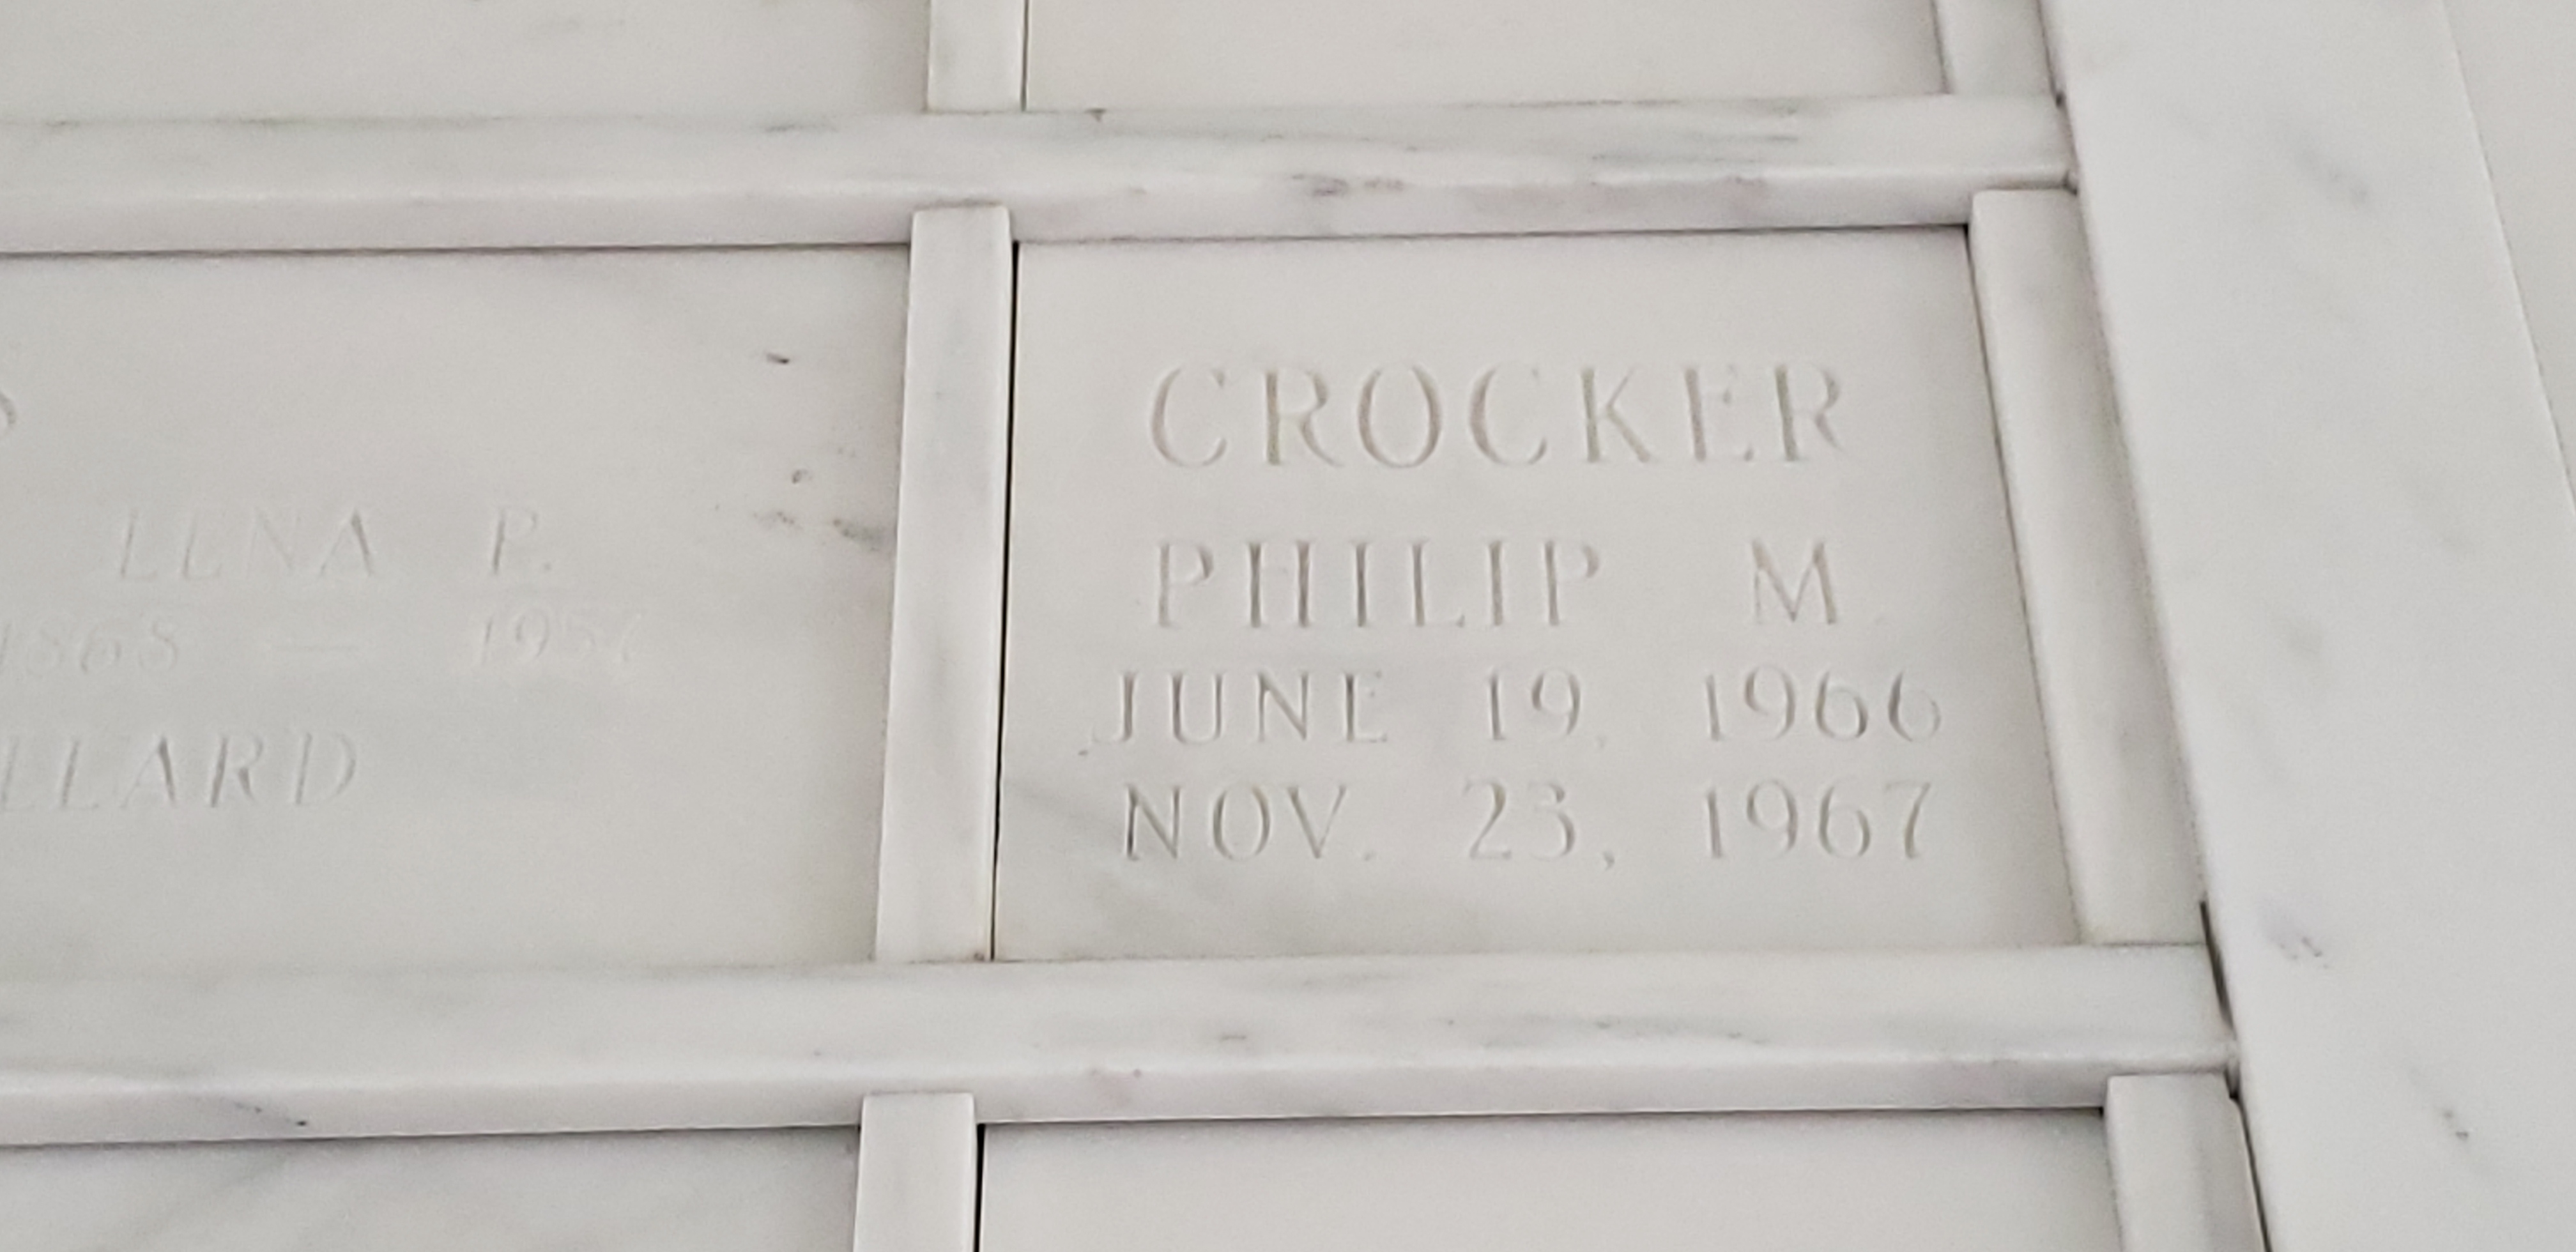 Philip M Crocker